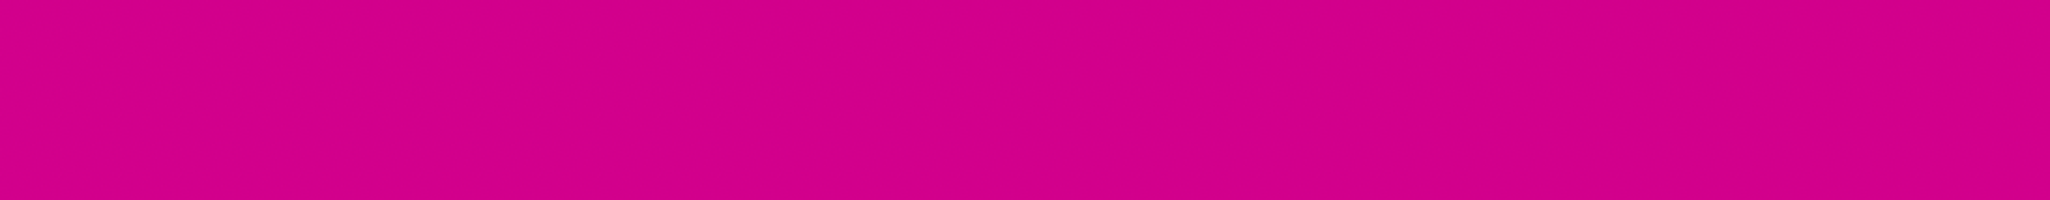 Fuschia coloured rectangle background